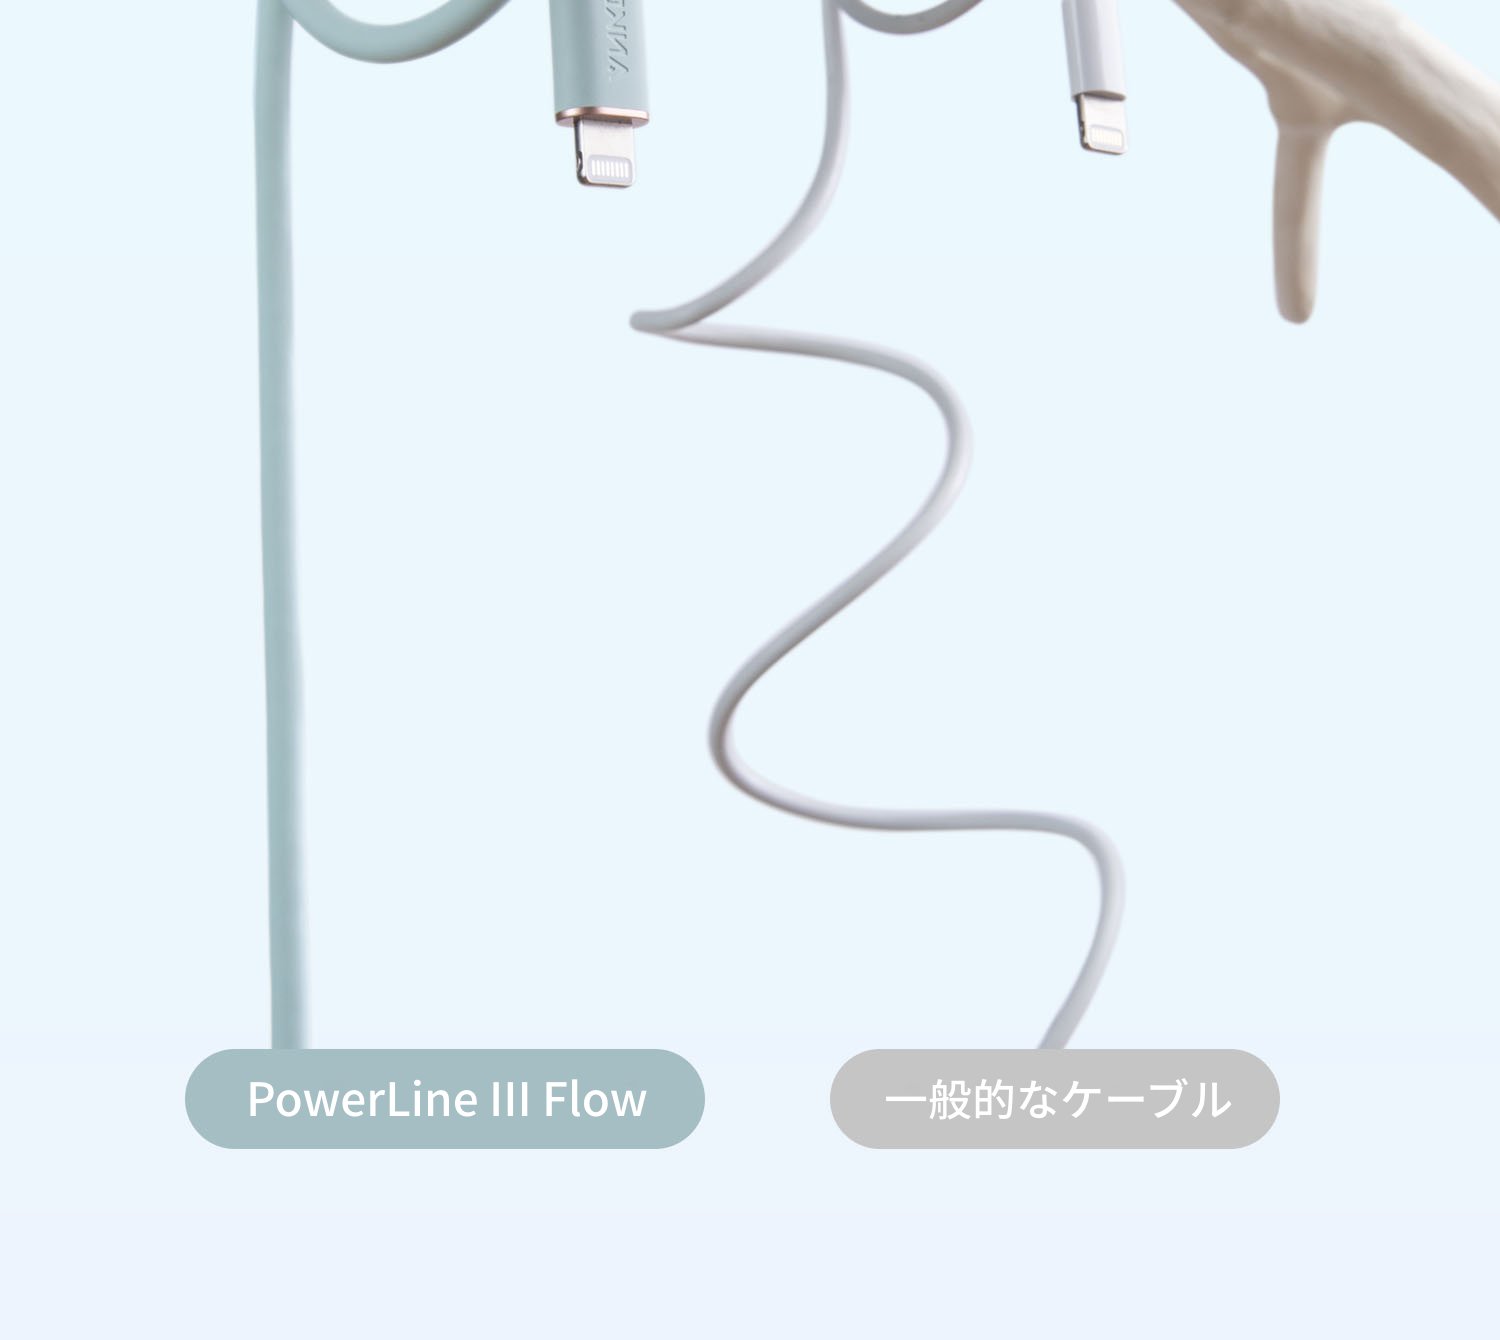 Anker PowerLine Ⅲ Flow USB-C  ライトニング ケーブル | やわらかく、絡みにくい高耐久ケーブル